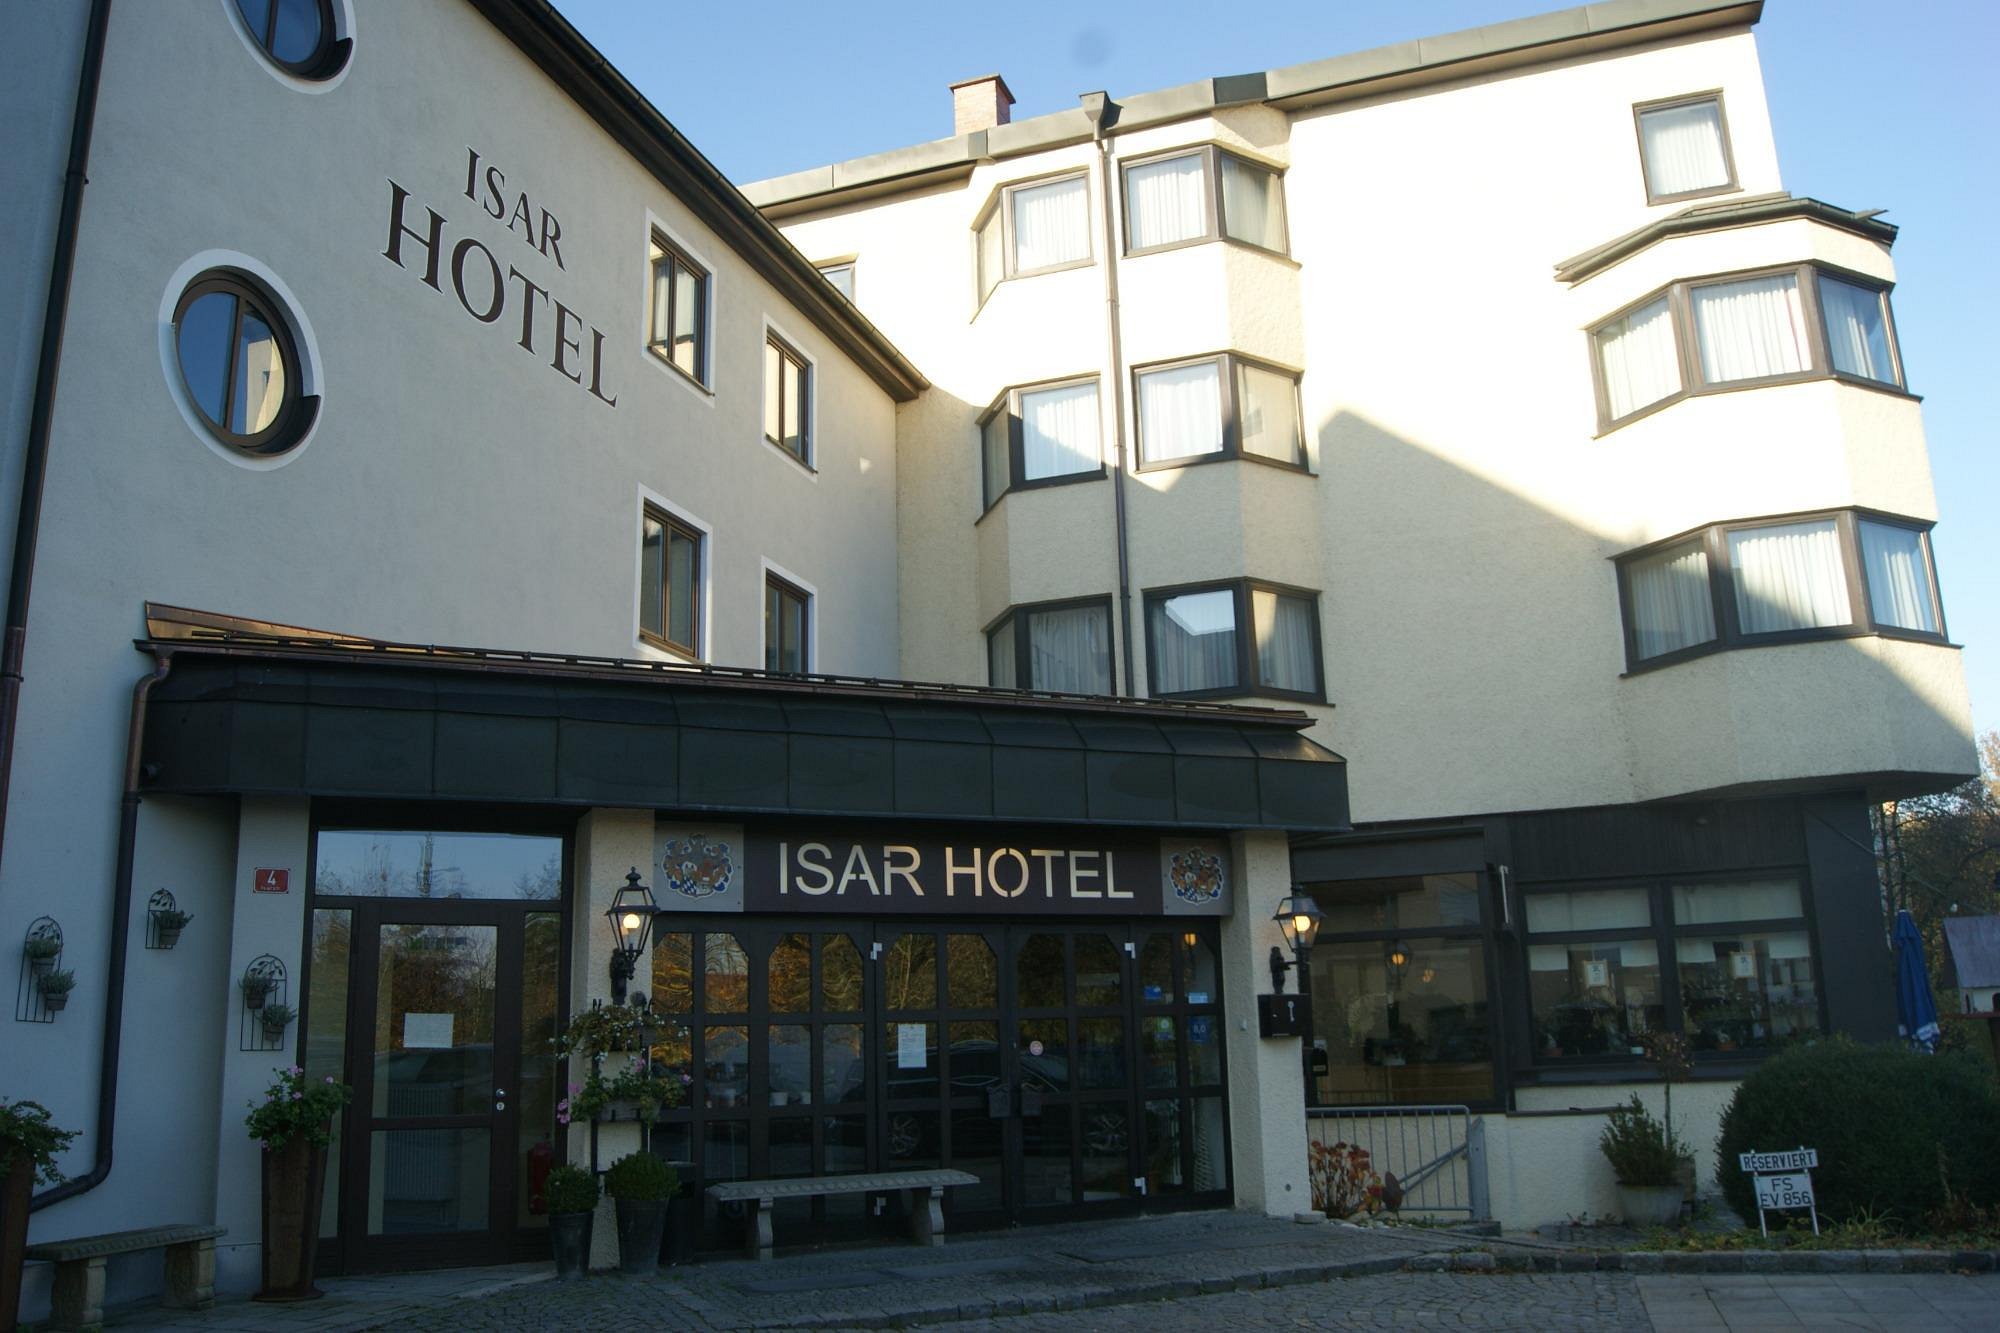 Isar Hotel image